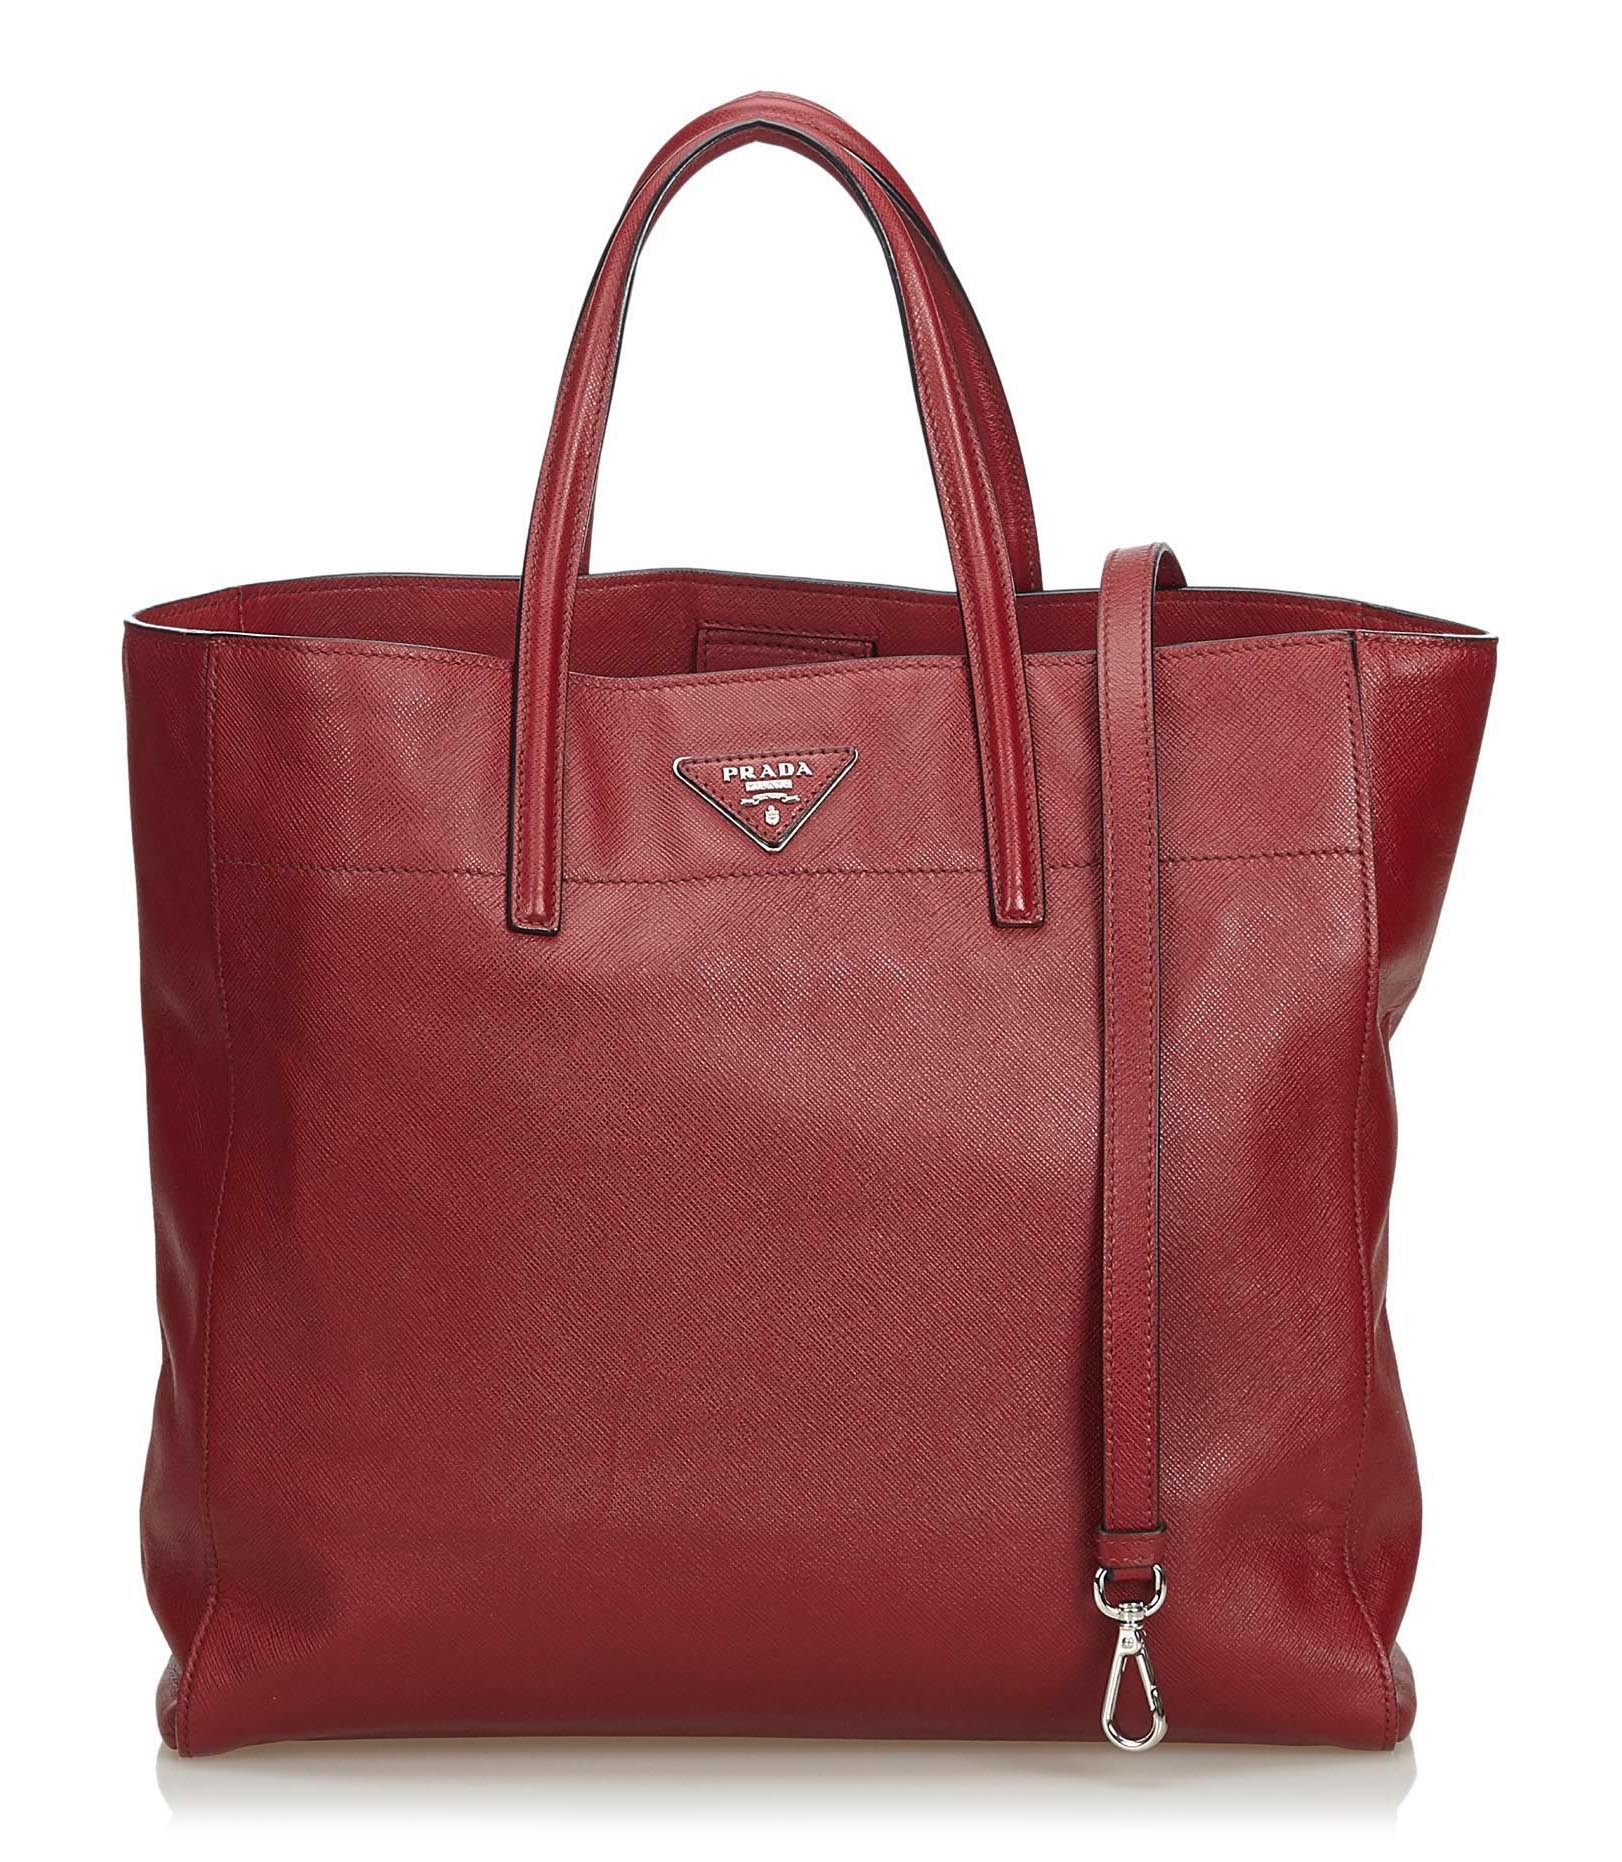 prada handbags red leather